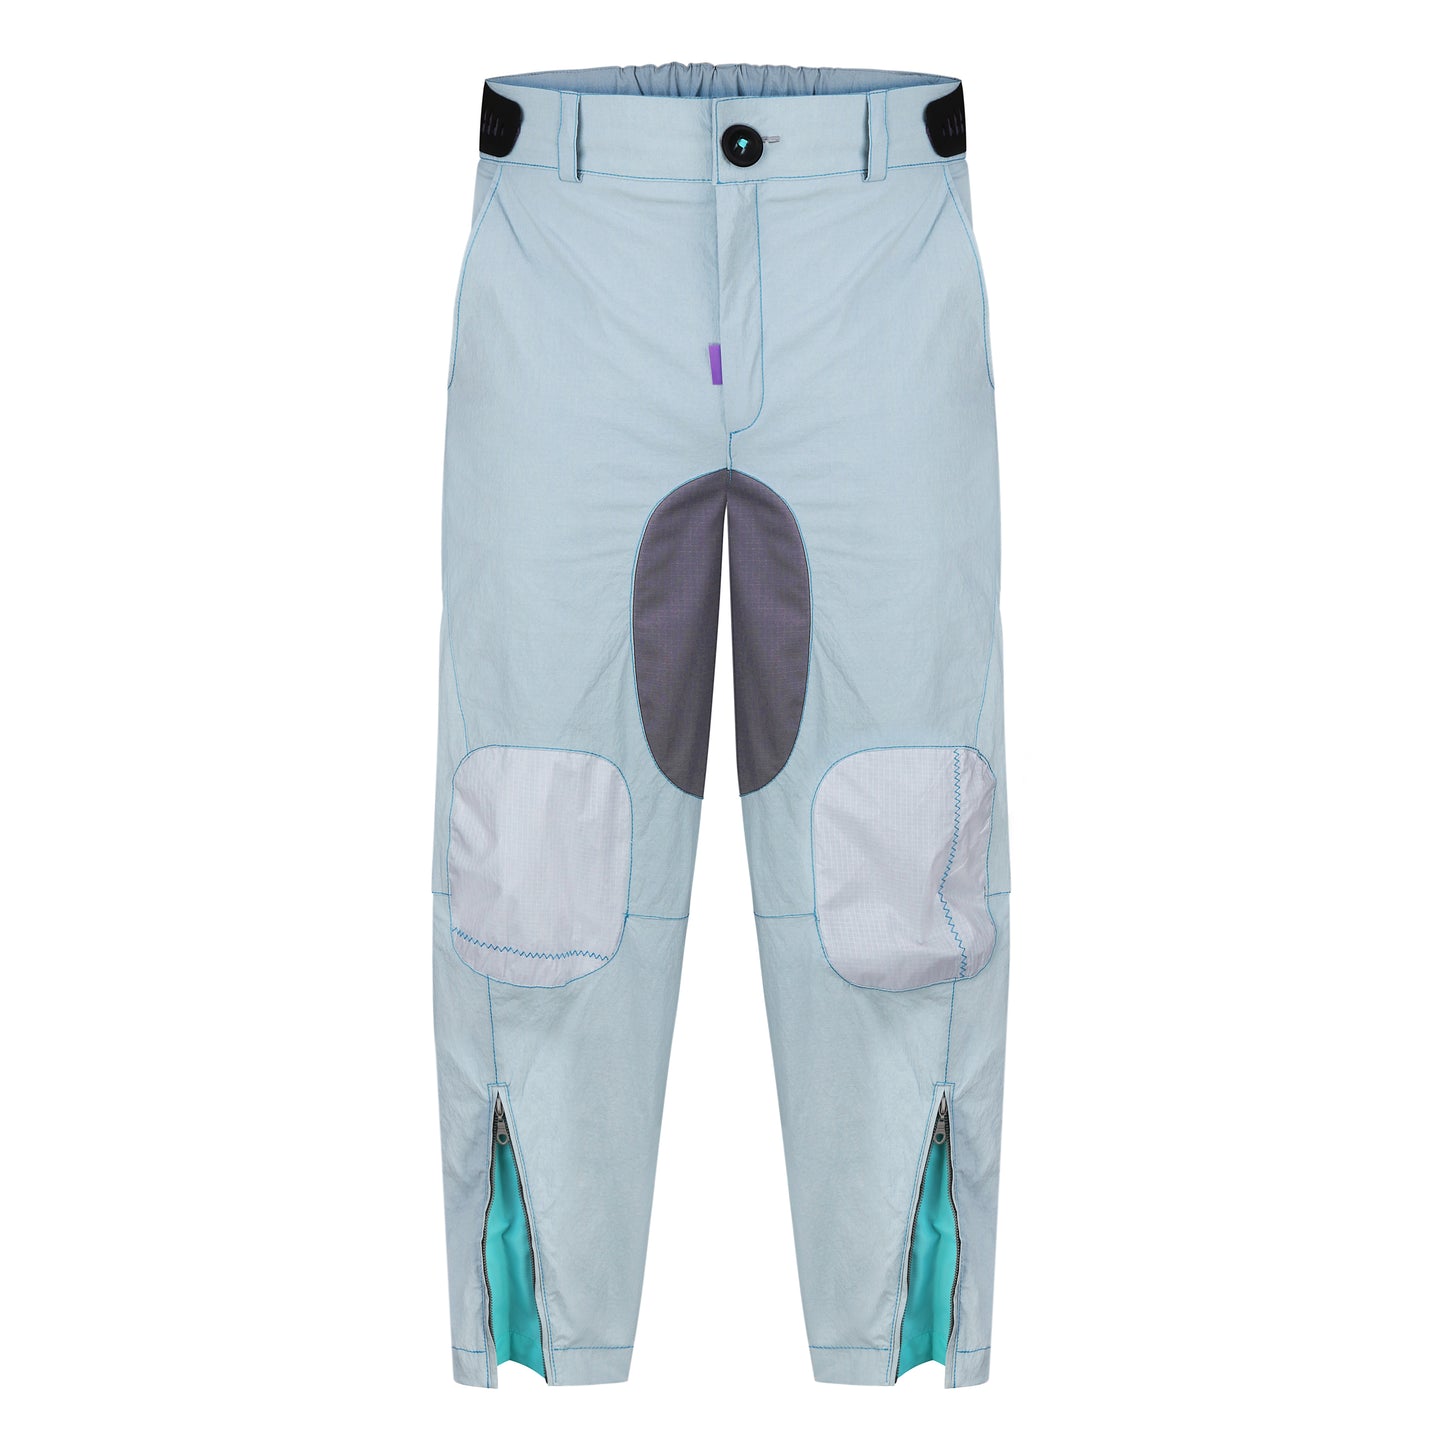 Stylish waterproof trousers for men from REwind, Ukrainian manufacturer brand